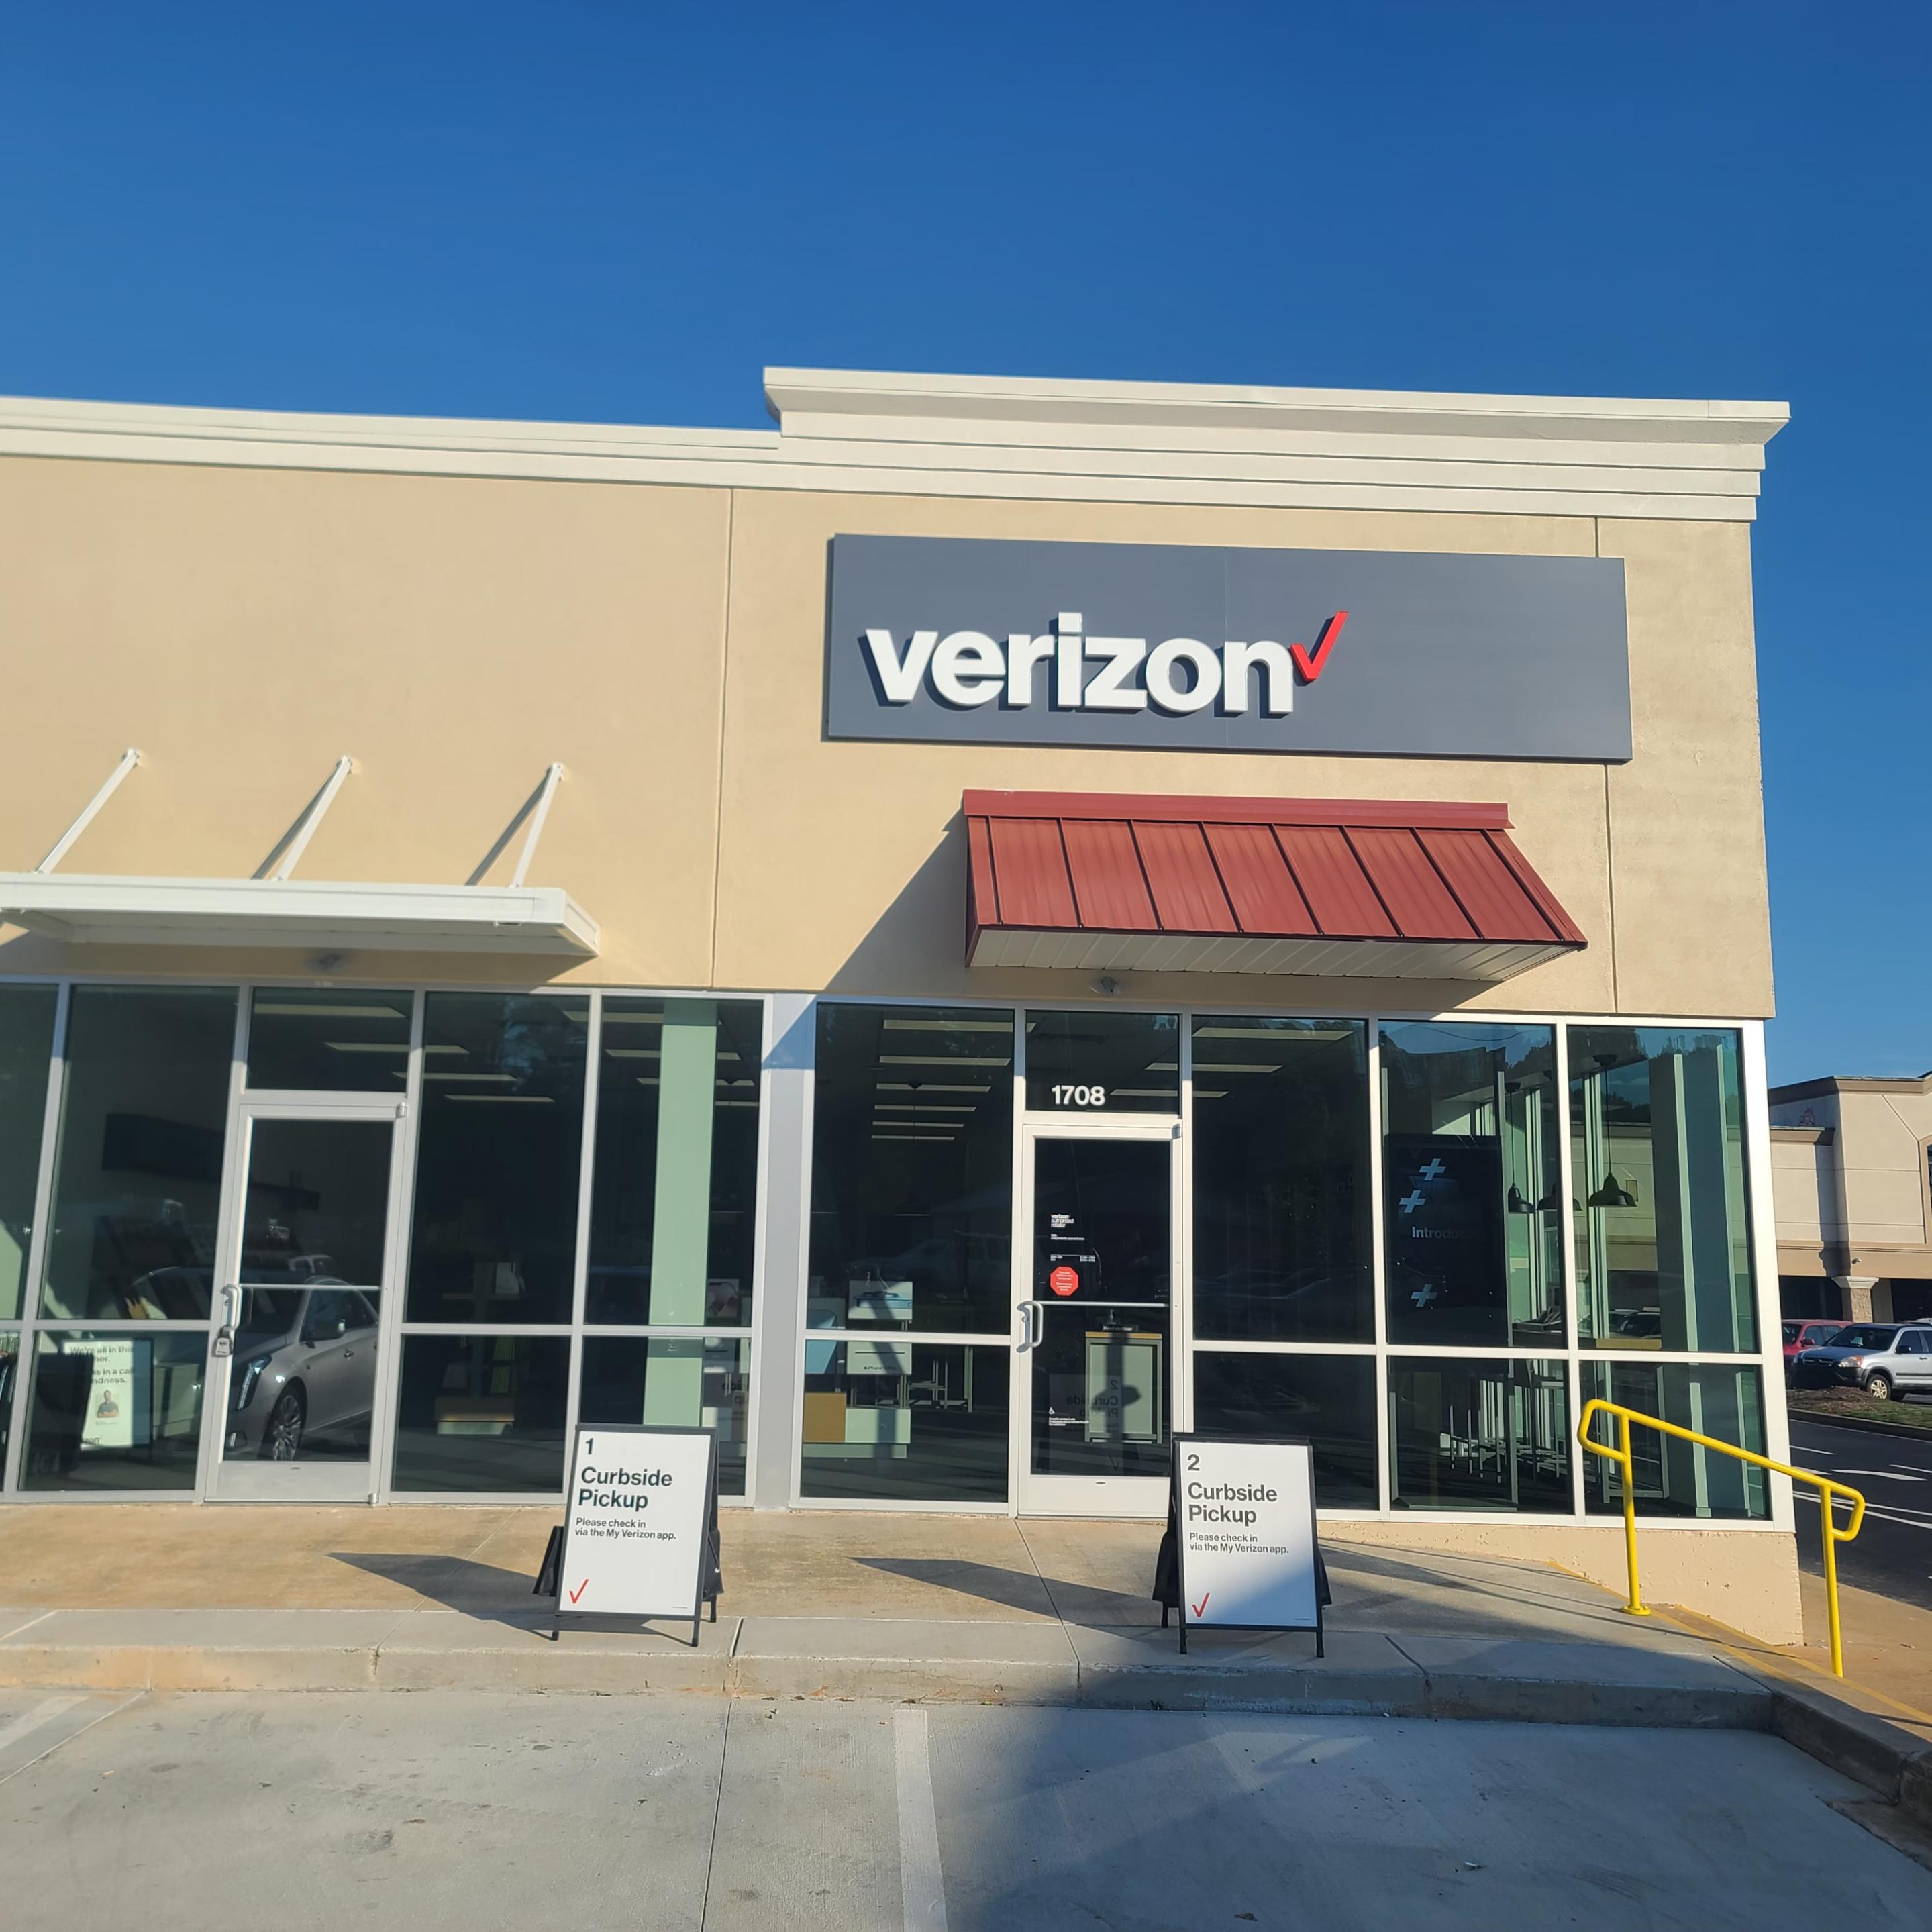 TCC, Verizon Authorized Retailer
1708 E Greenville St
Anderson, SC